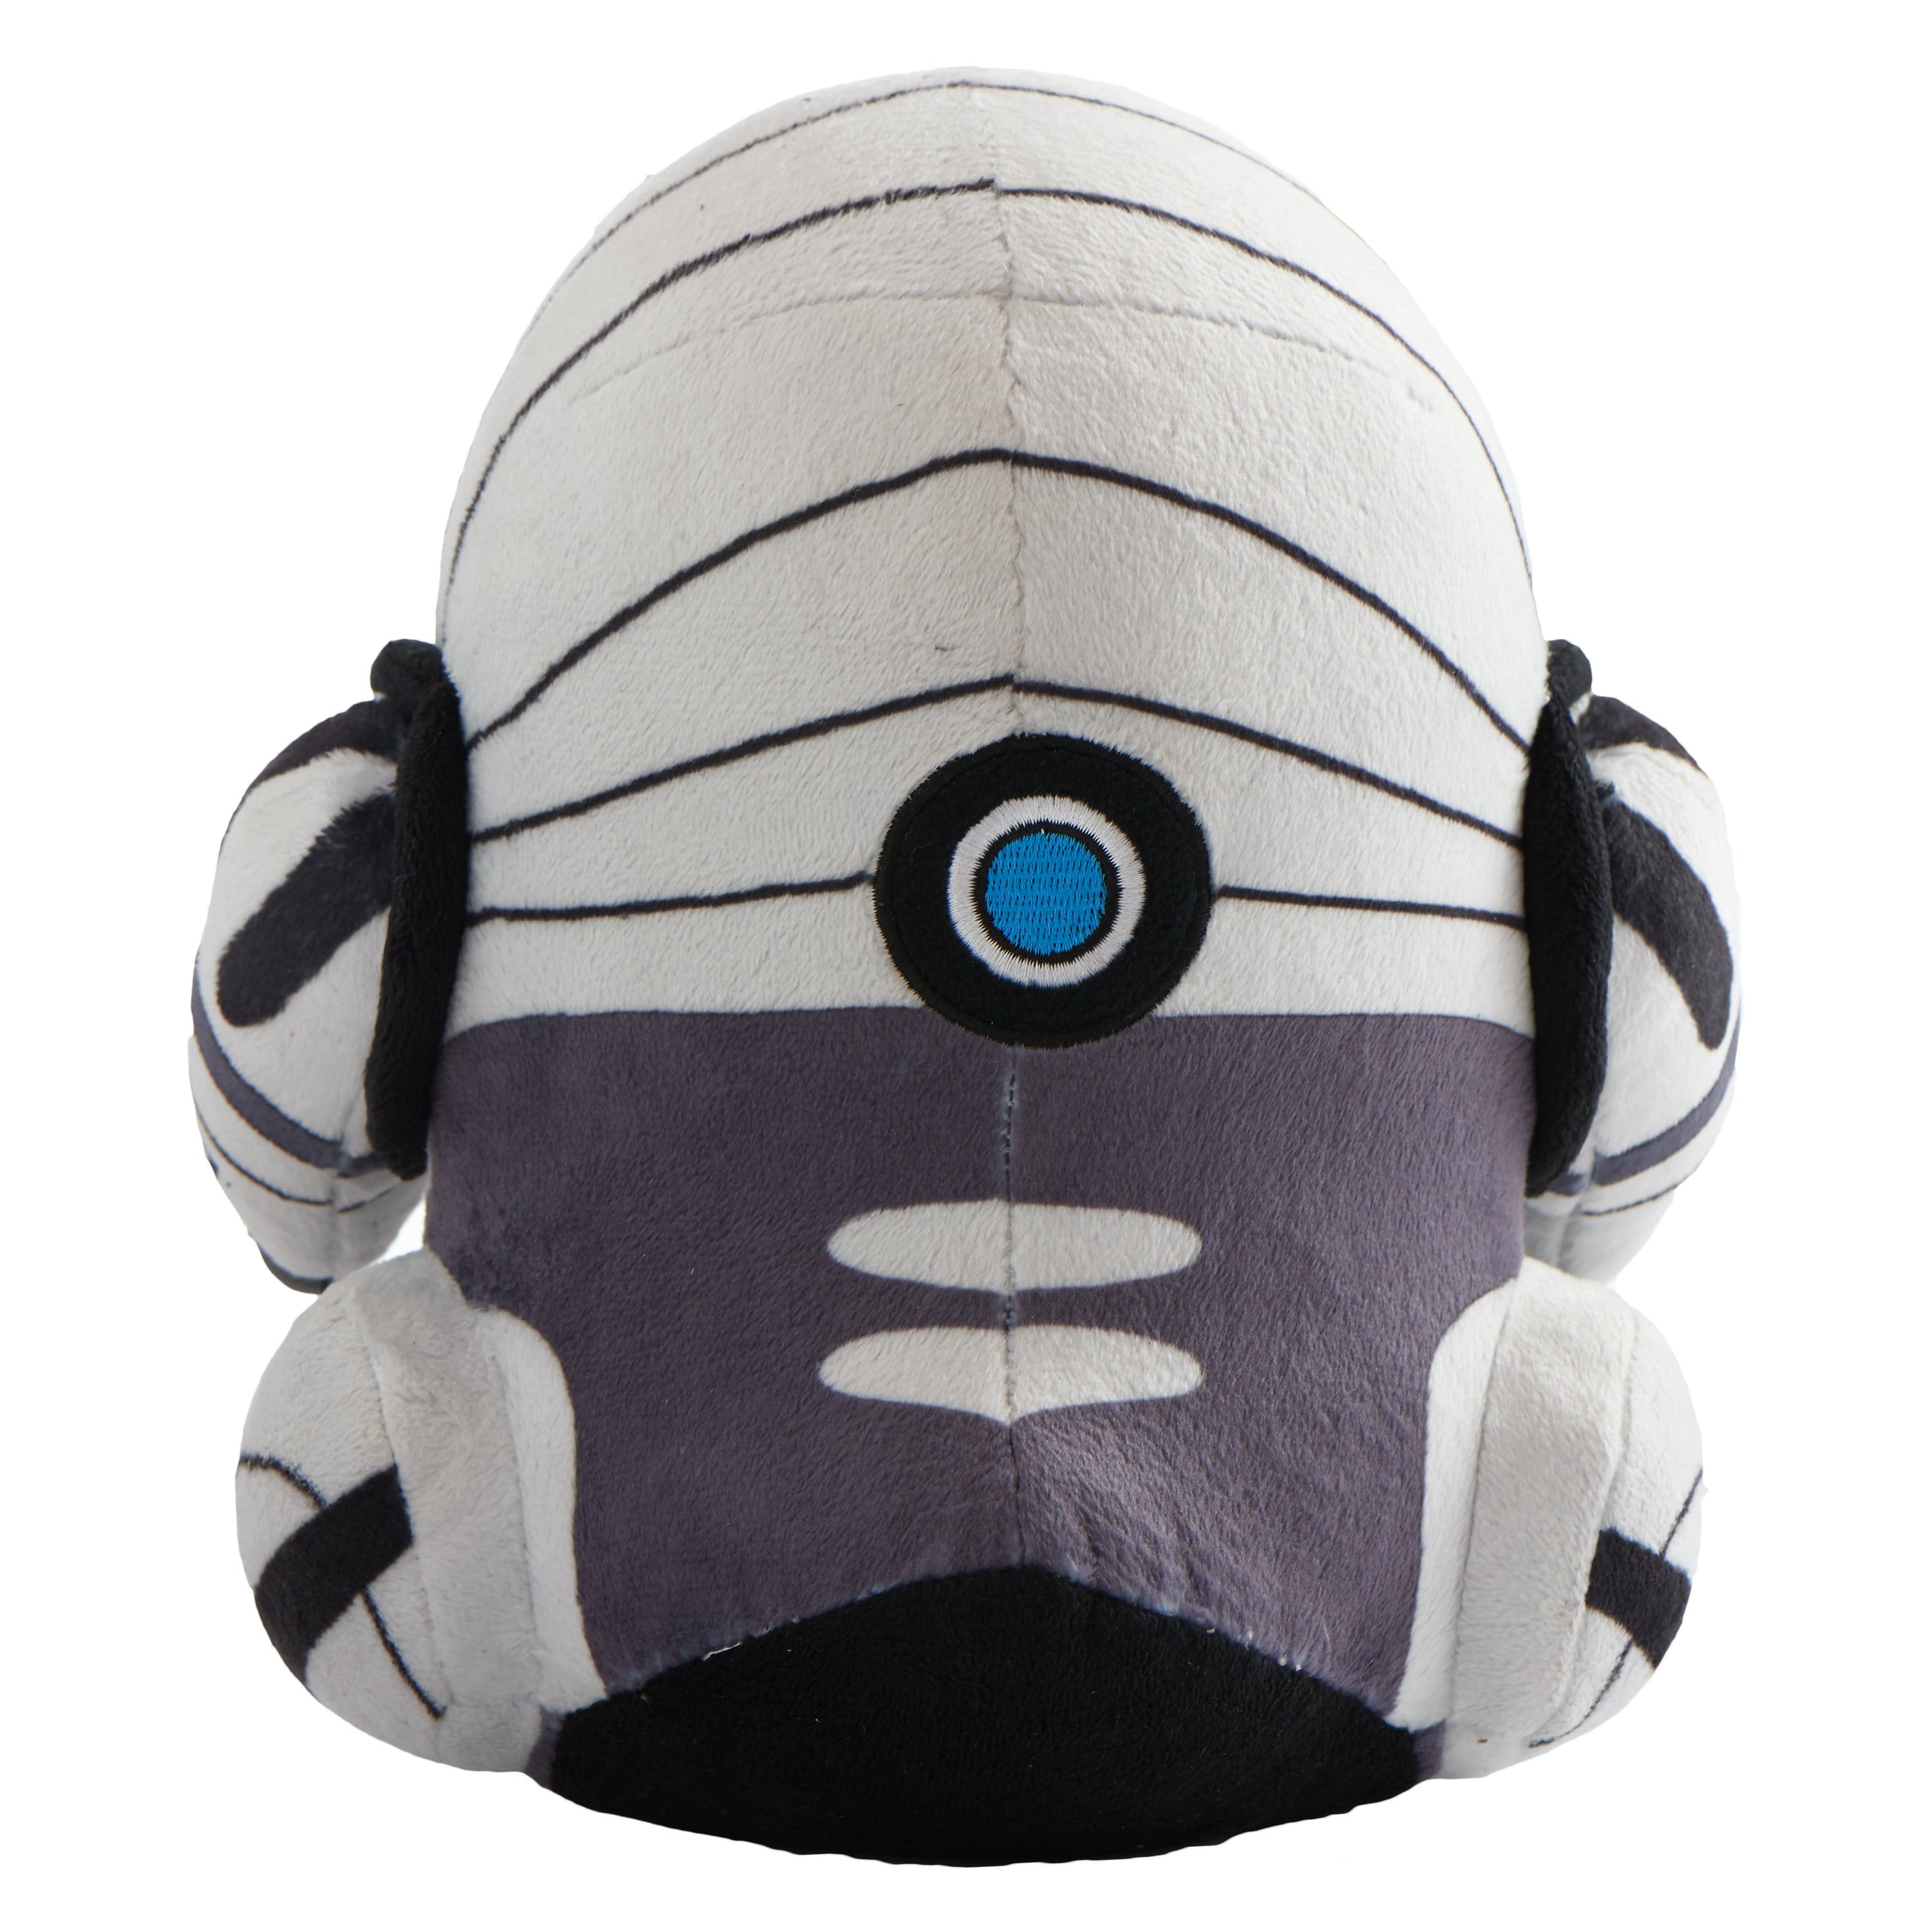 Mass Effect - 9" Grunt Collector's  Stuffed Plush Back View